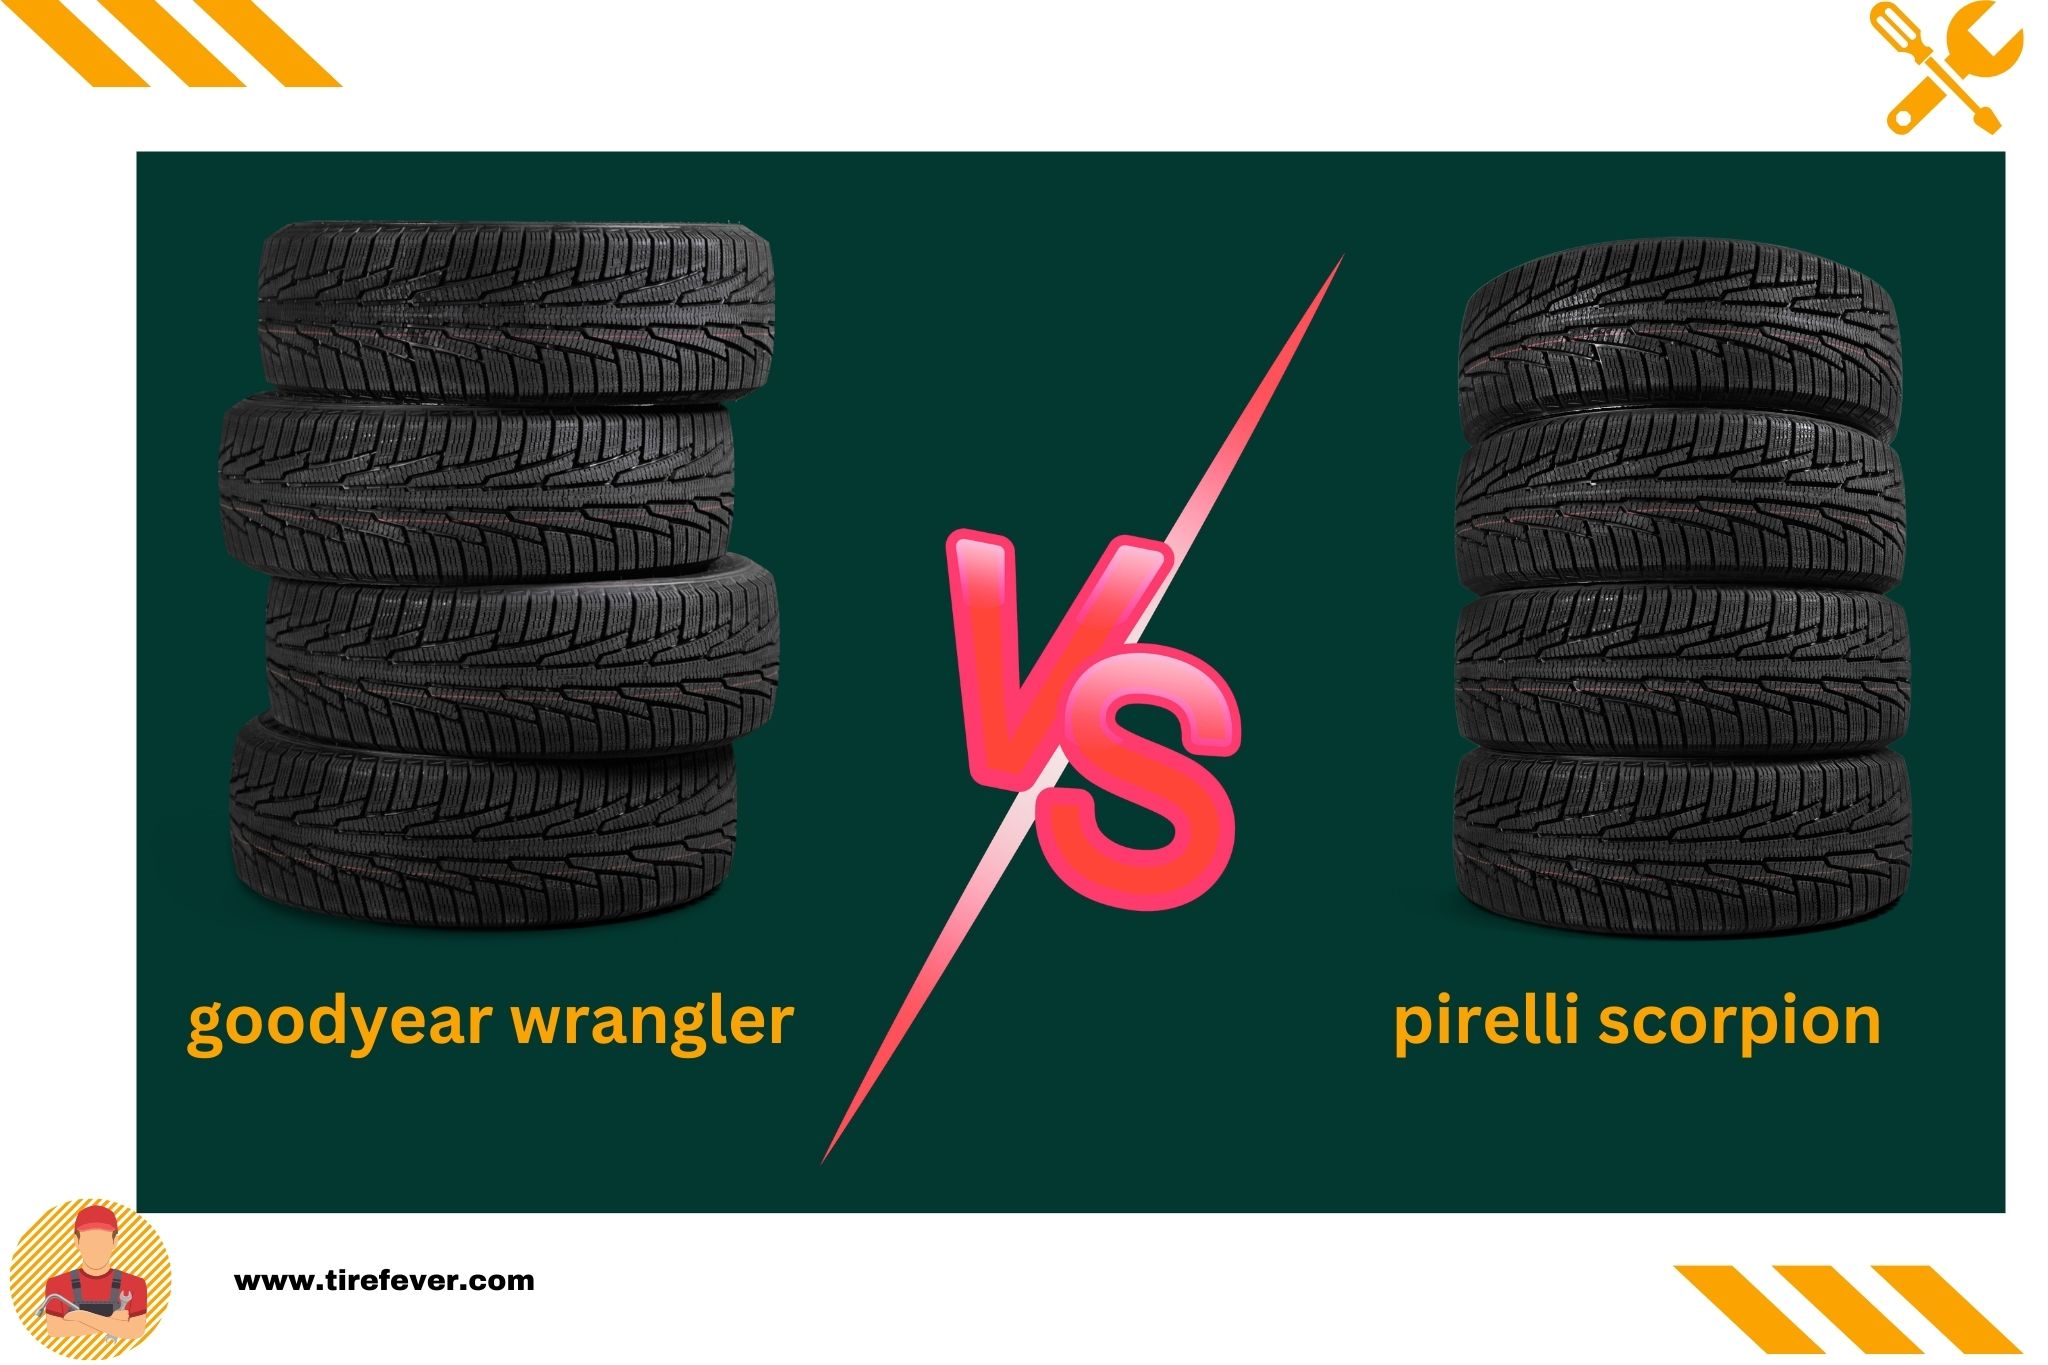 goodyear wrangler vs pirelli scorpion